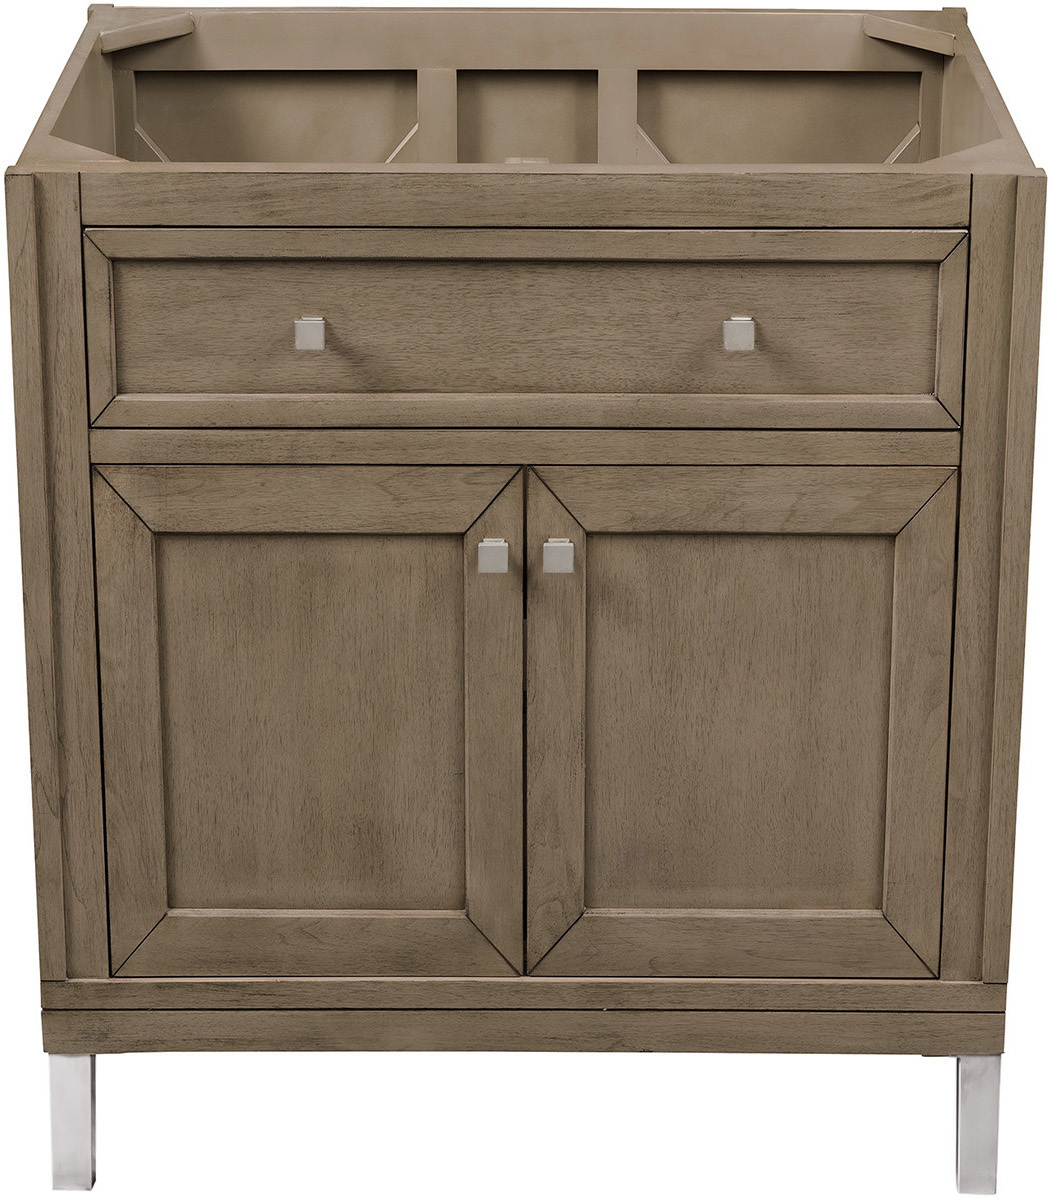 60 inch bathroom cabinet single sink James Martin Cabinet Whitewashed Walnut Contemporary/Modern, Transitional